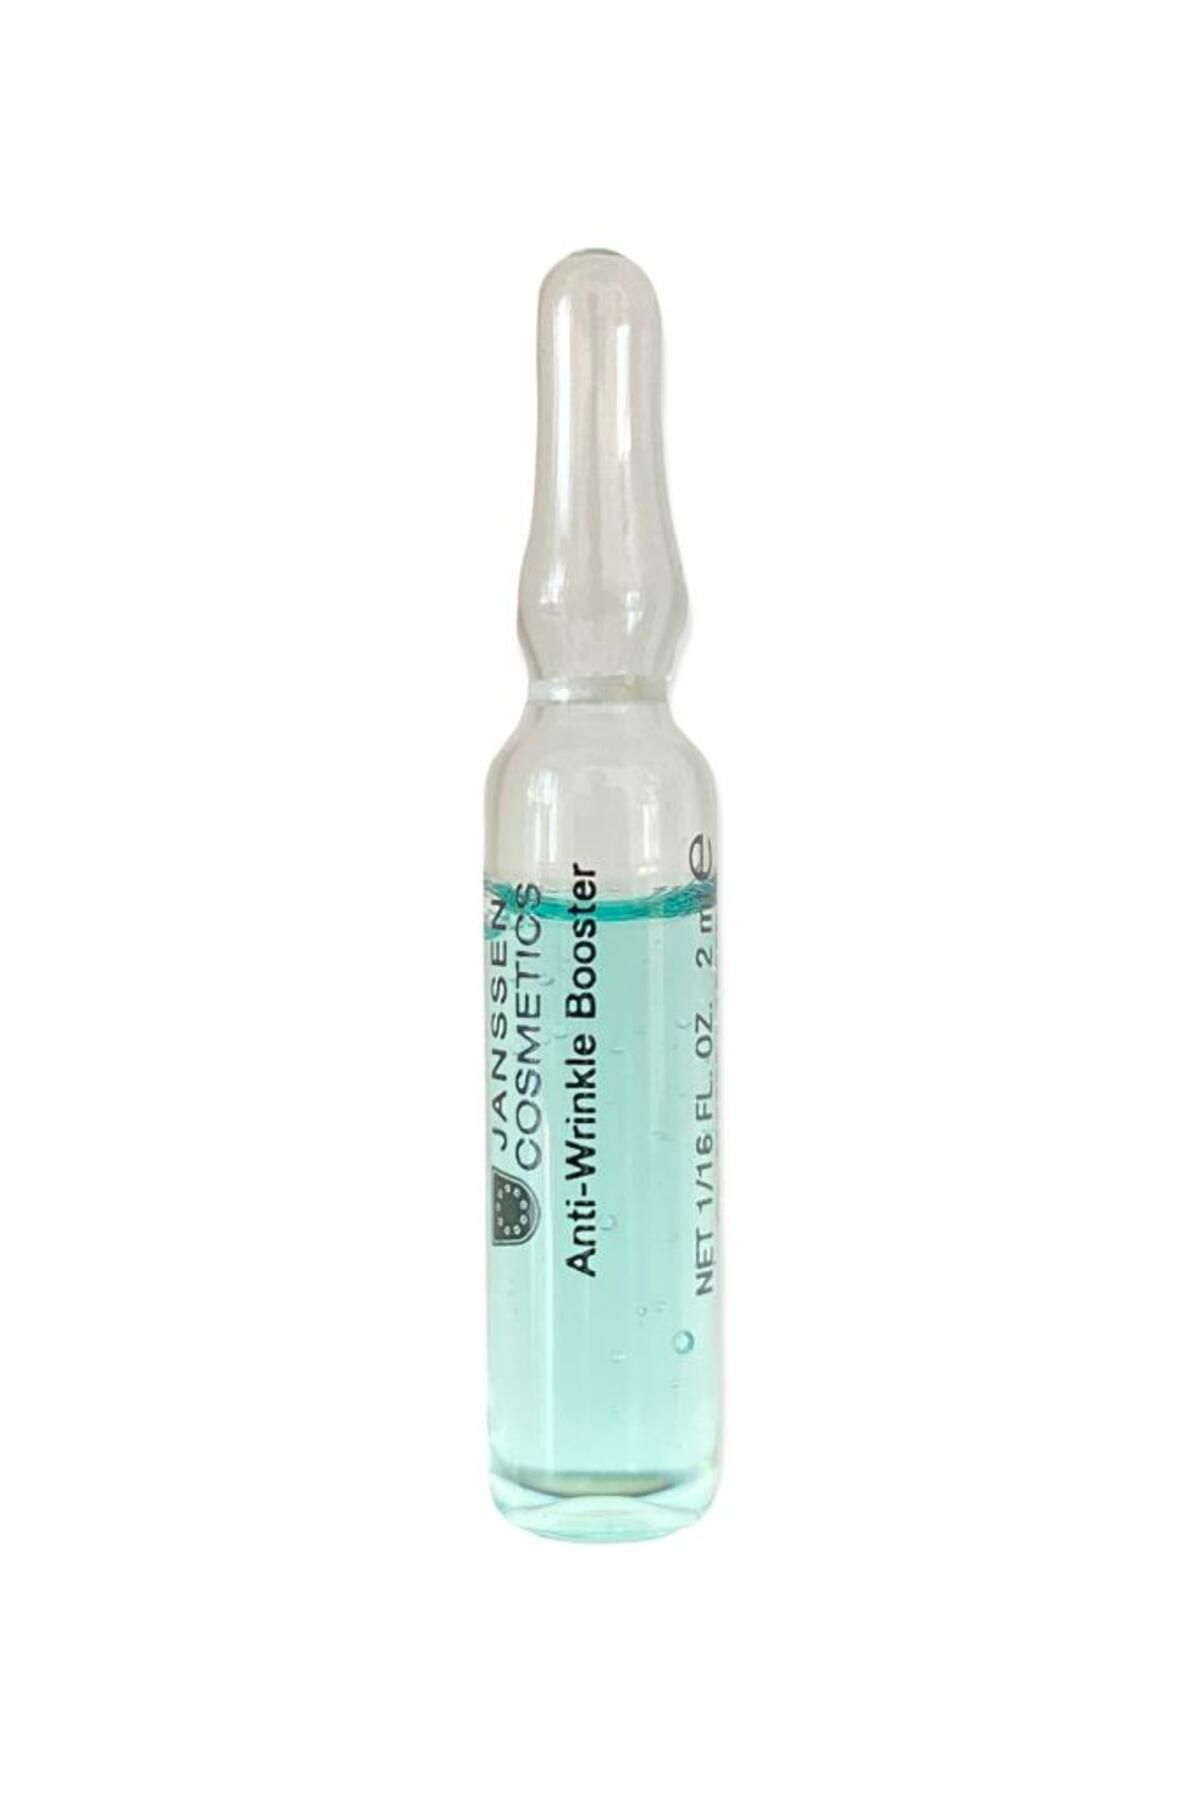 Janssen Cosmetics Anti-wrinkle Booster 2 ml Ampul Tekli